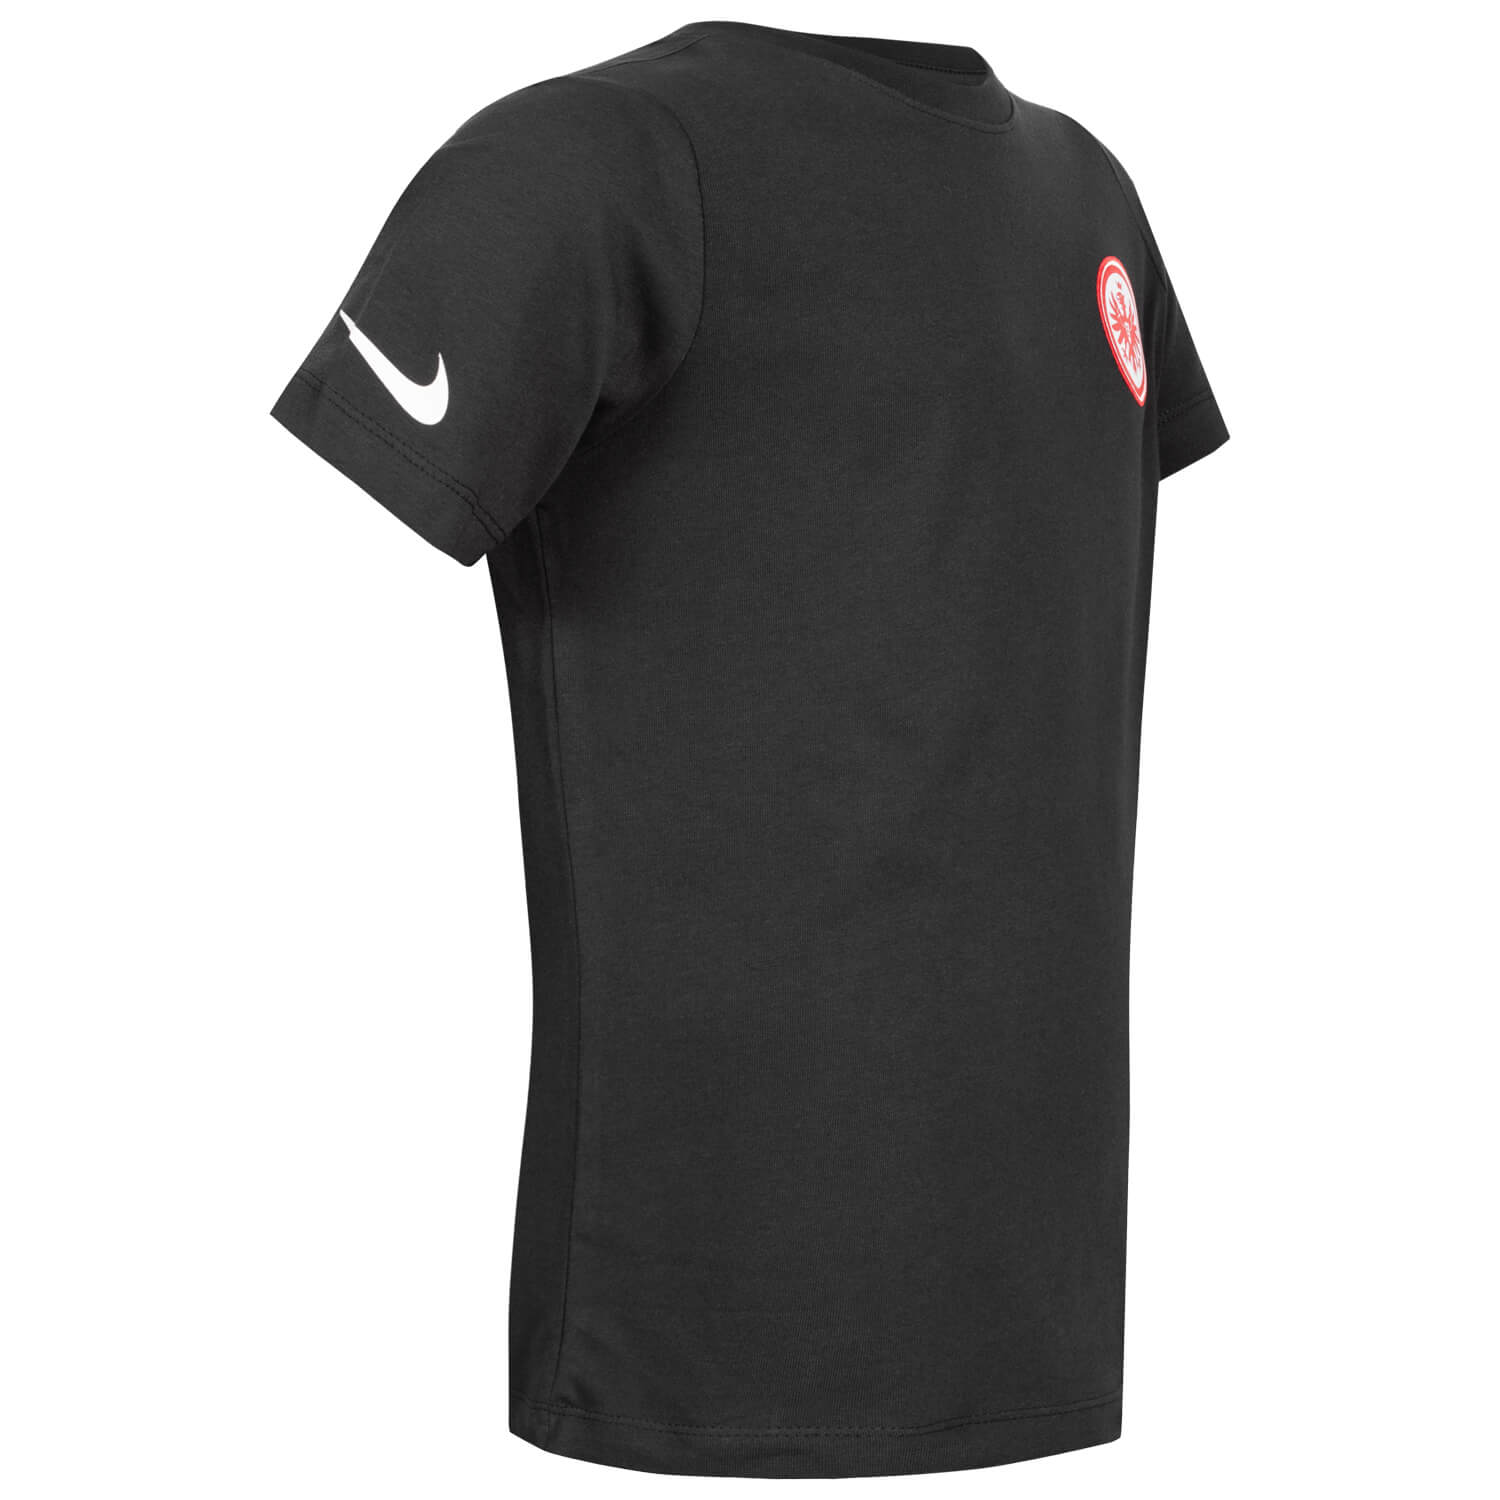 Bild 3: Nike Kids T-Shirt Basic schwarz